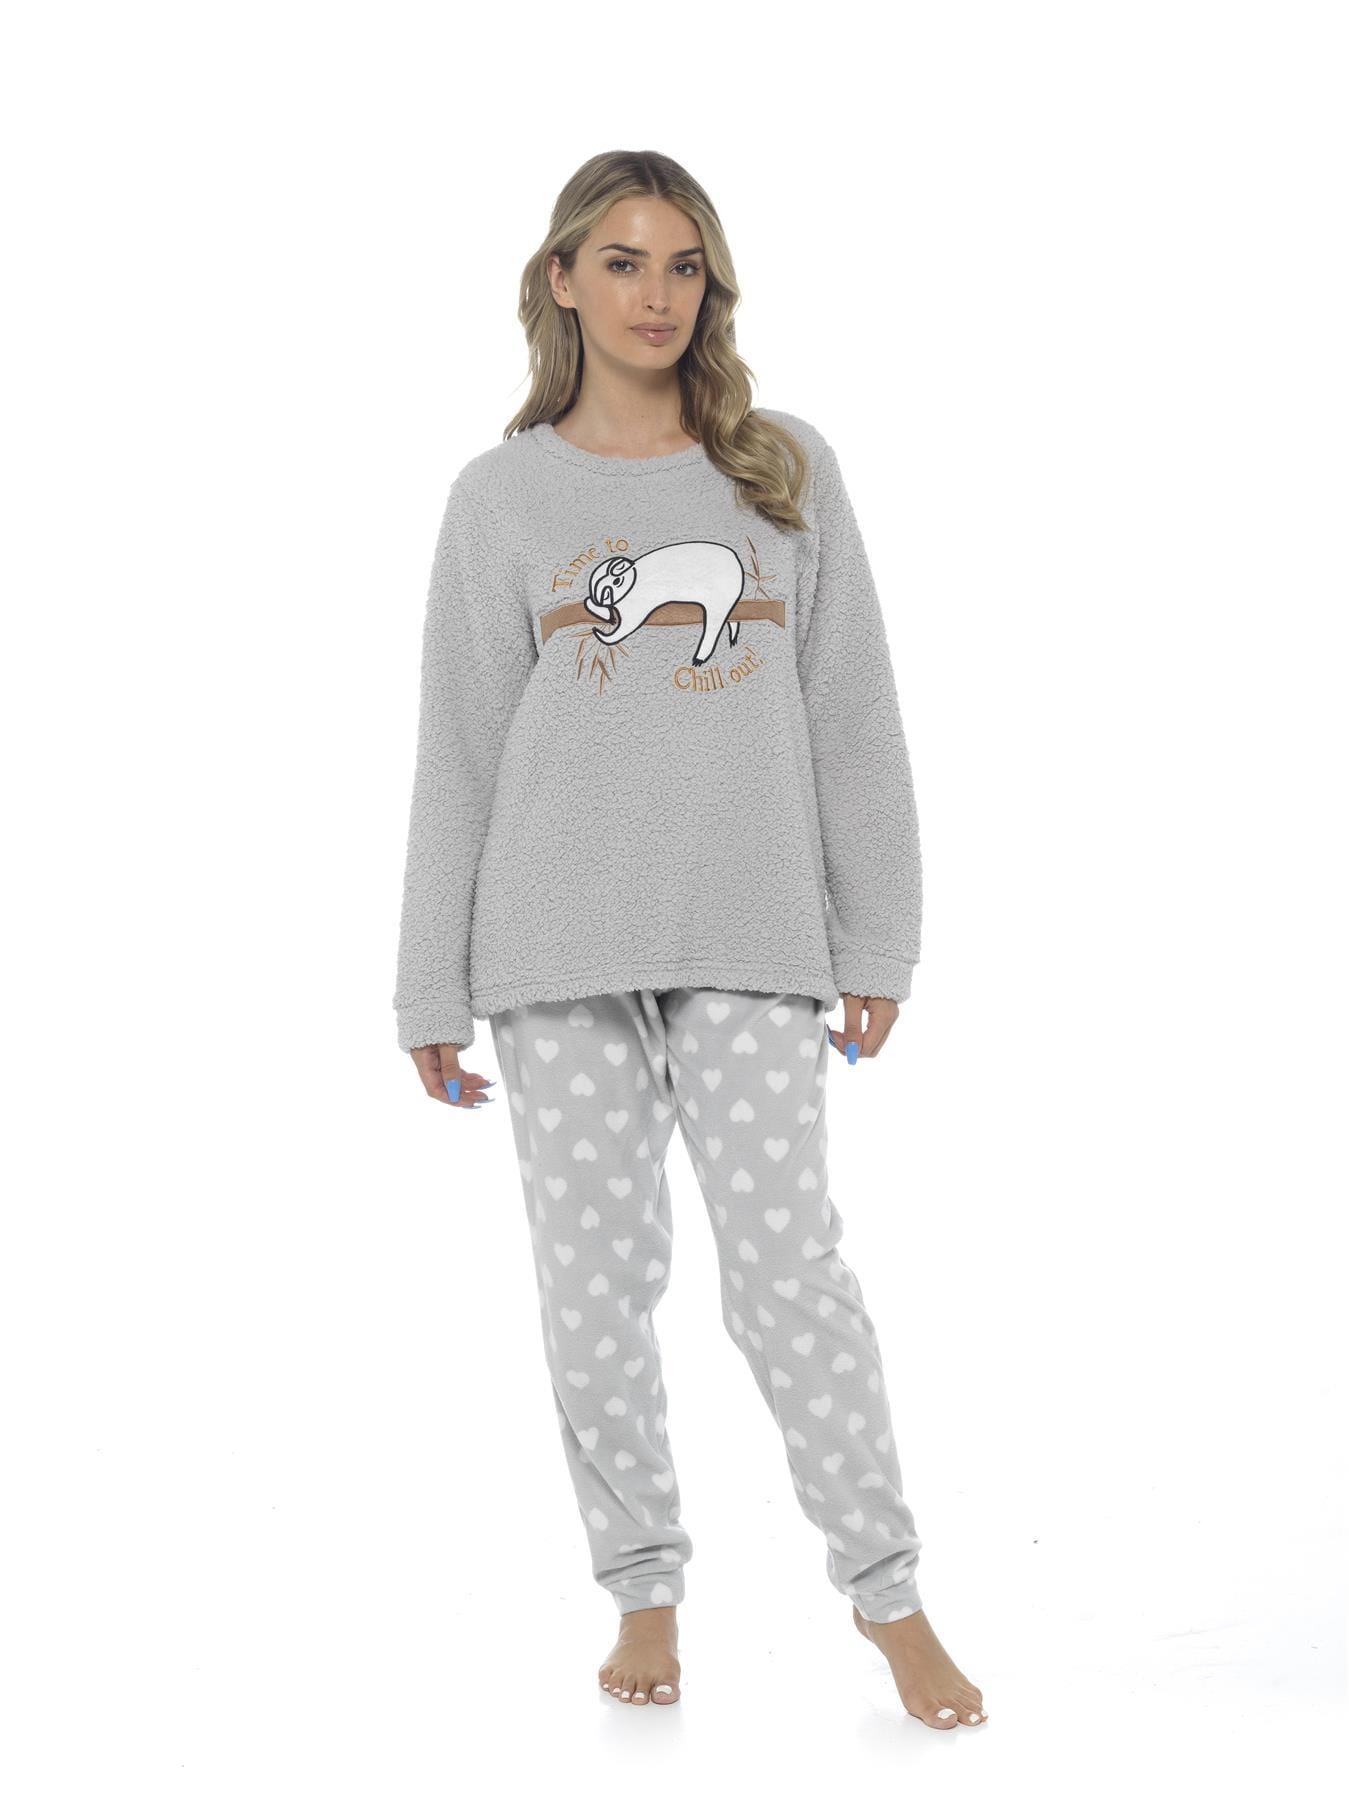 Sloth Snuggle Teddy Fleece Pyjama Set SMALL | UK 8-10 Daisy Dreamer Pyjamas